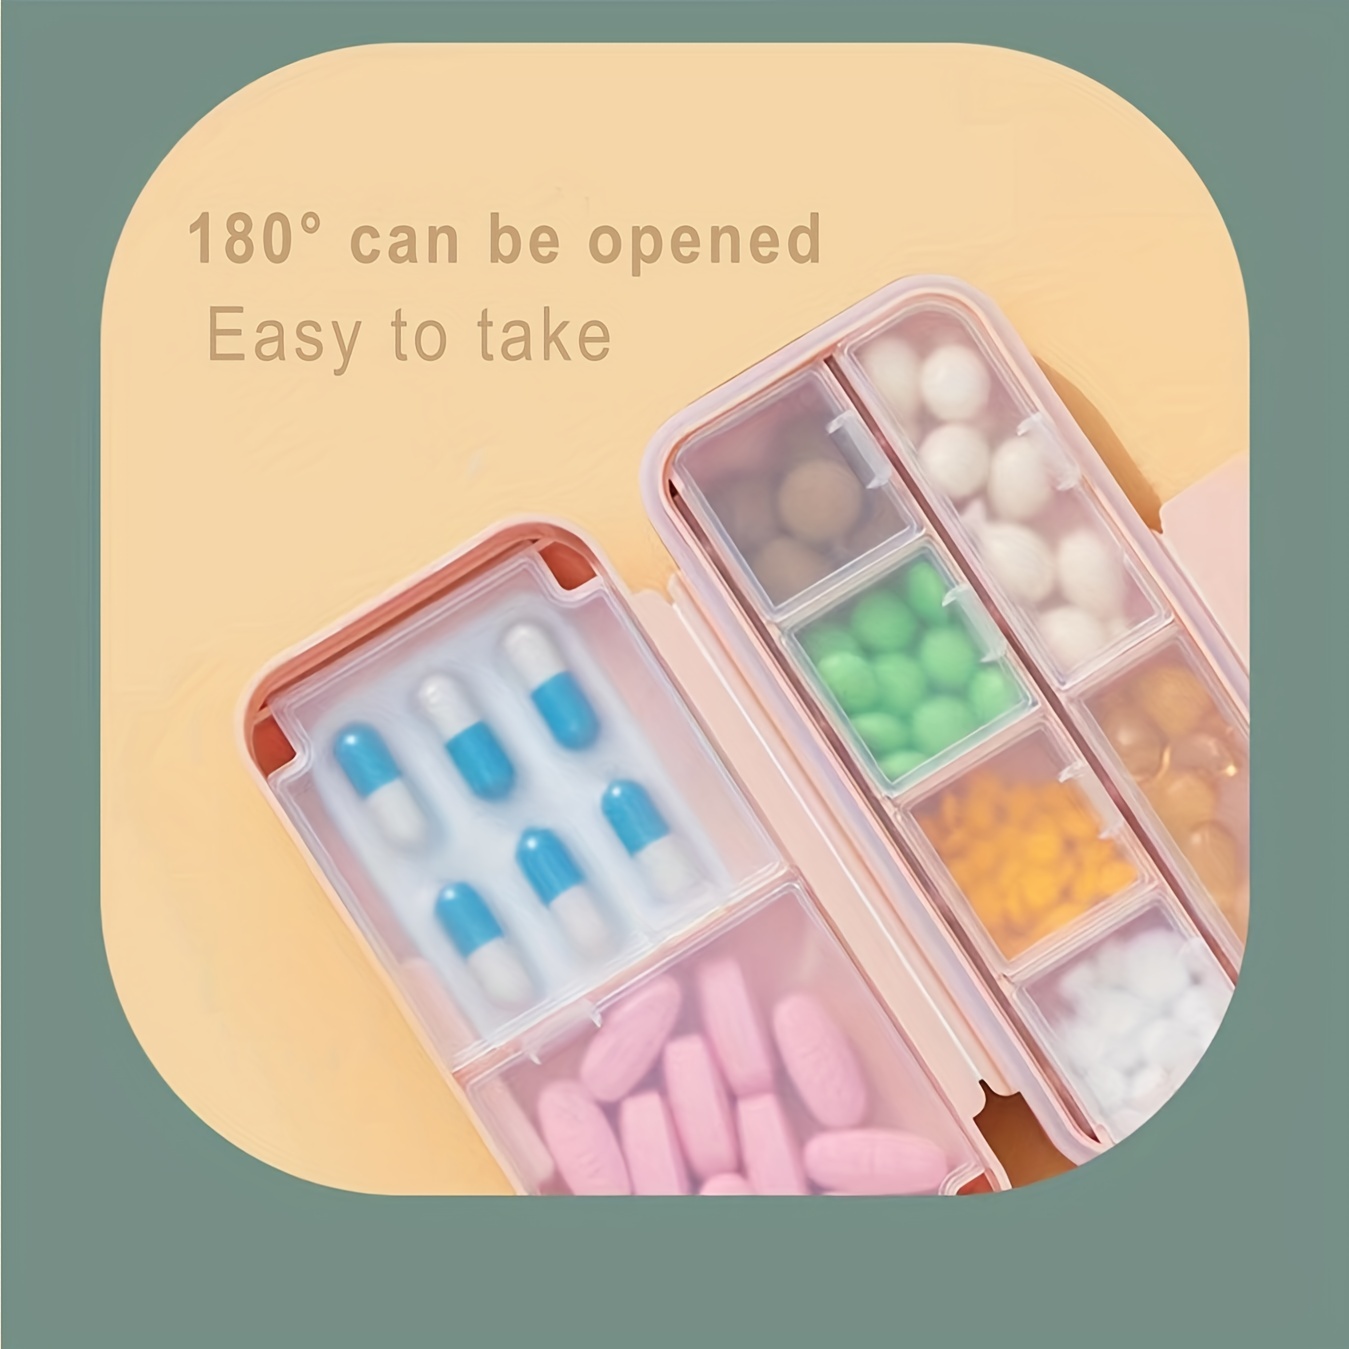 Daily Pill Organizer, 8 Compartments Portable Pill Box